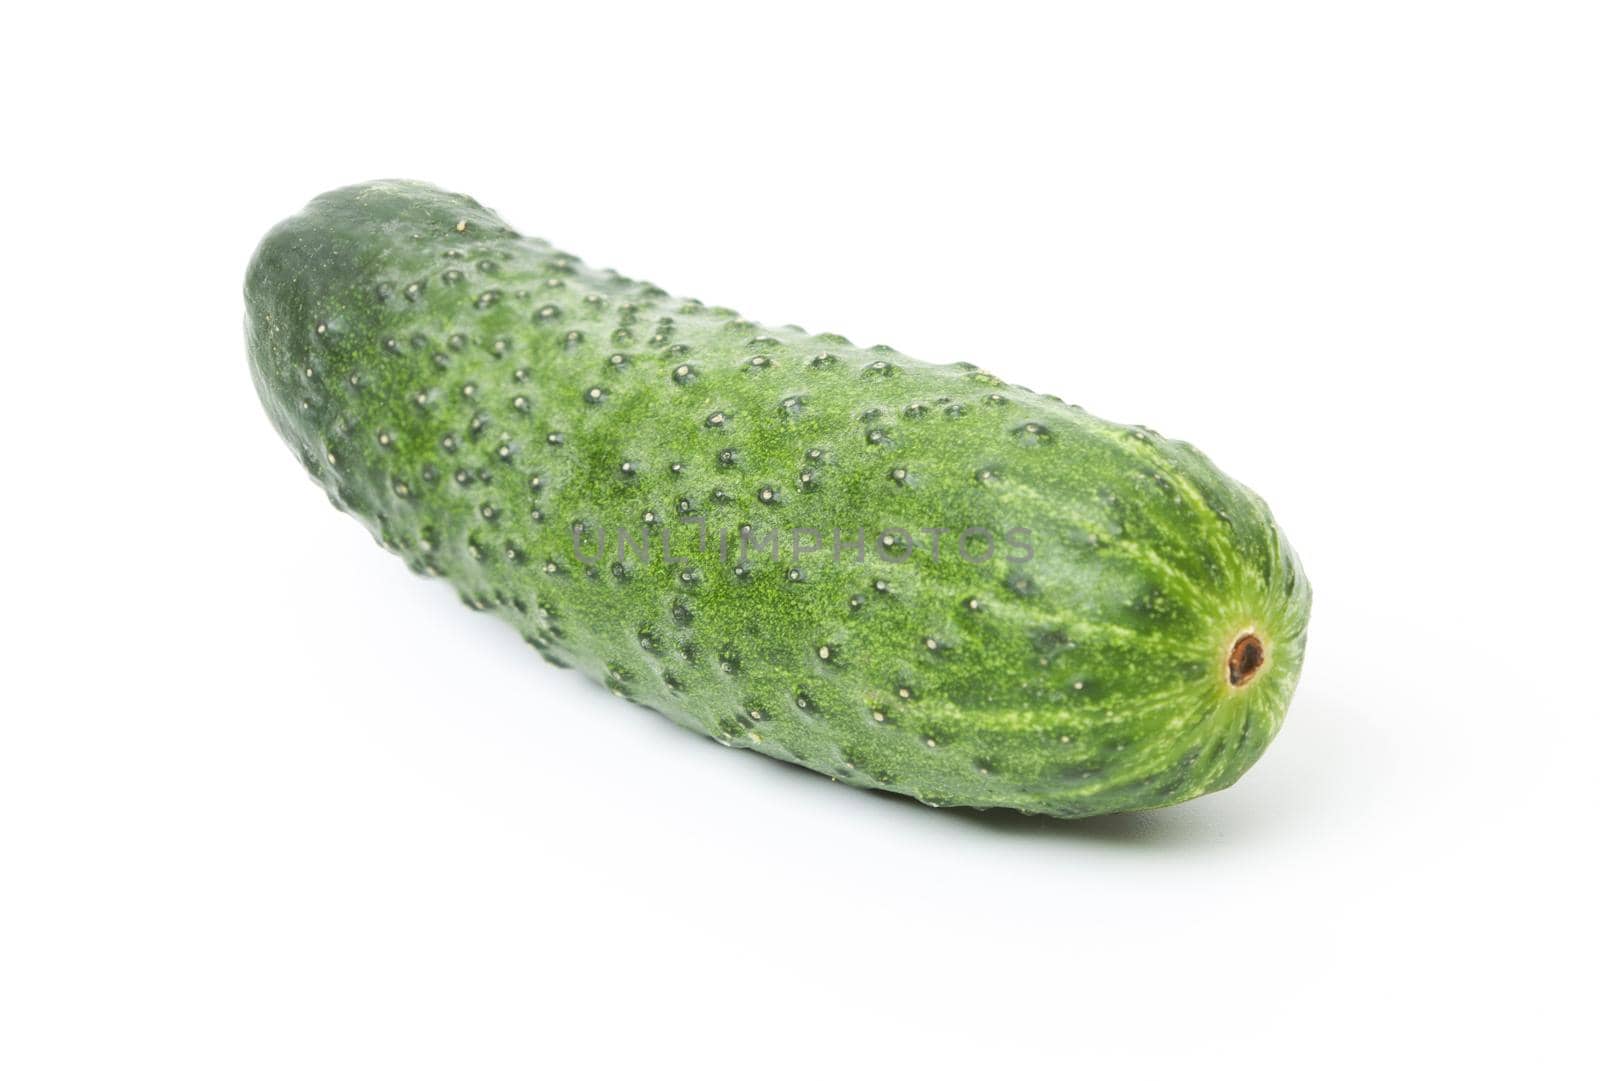 Raw cucumber isolate on white background